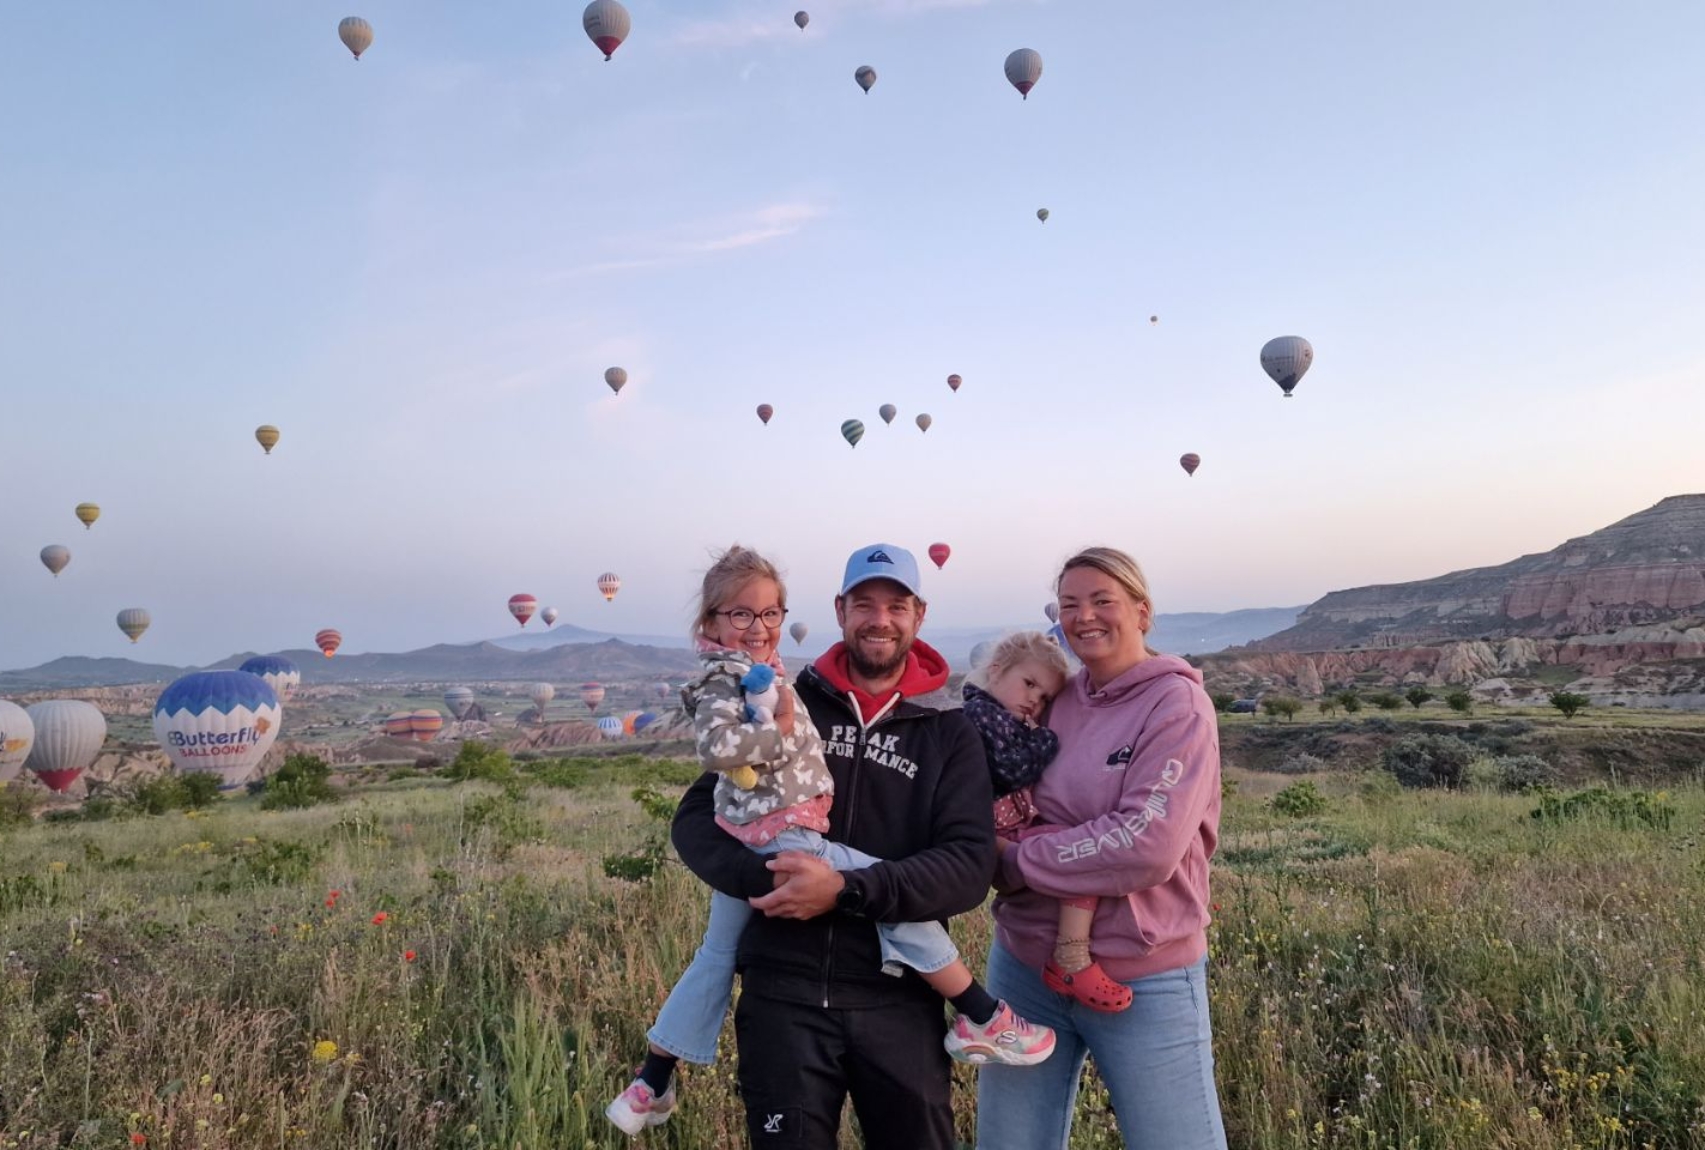 Familie Hommes_camperreis_Zuid-Europa_met z’n vieren tussen de luchtballonnen